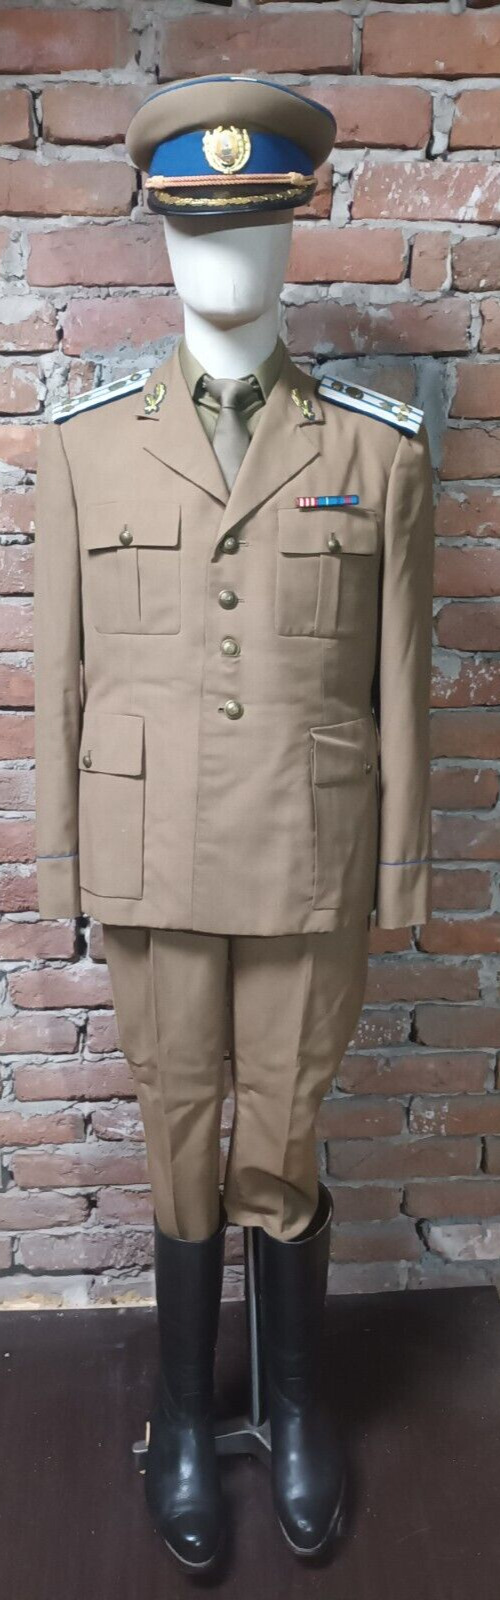 Romania,state security military costume, colonel rank,communist period